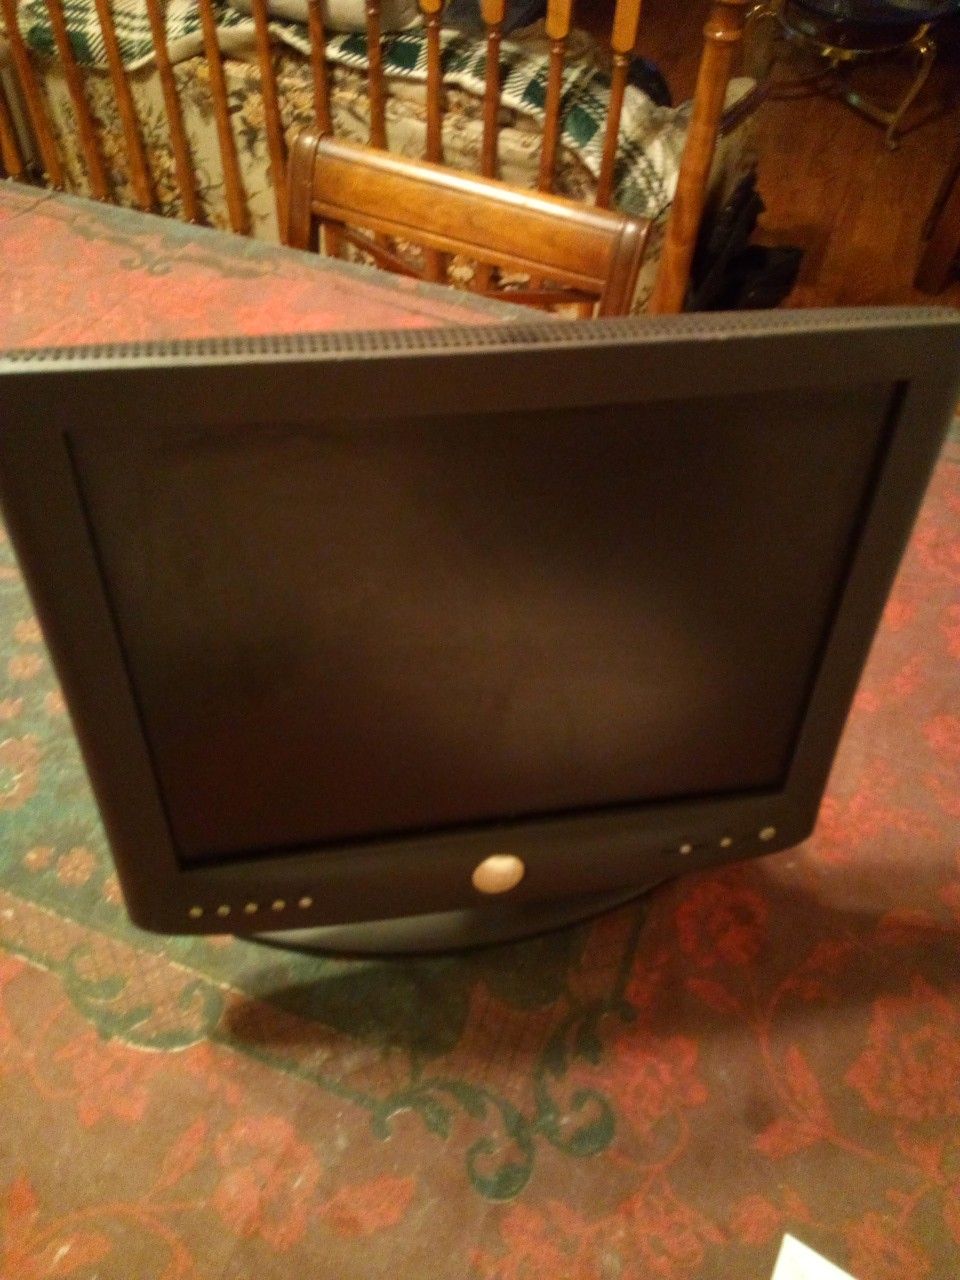 Dell computer monitor/model # 1503fp/15 inch screen